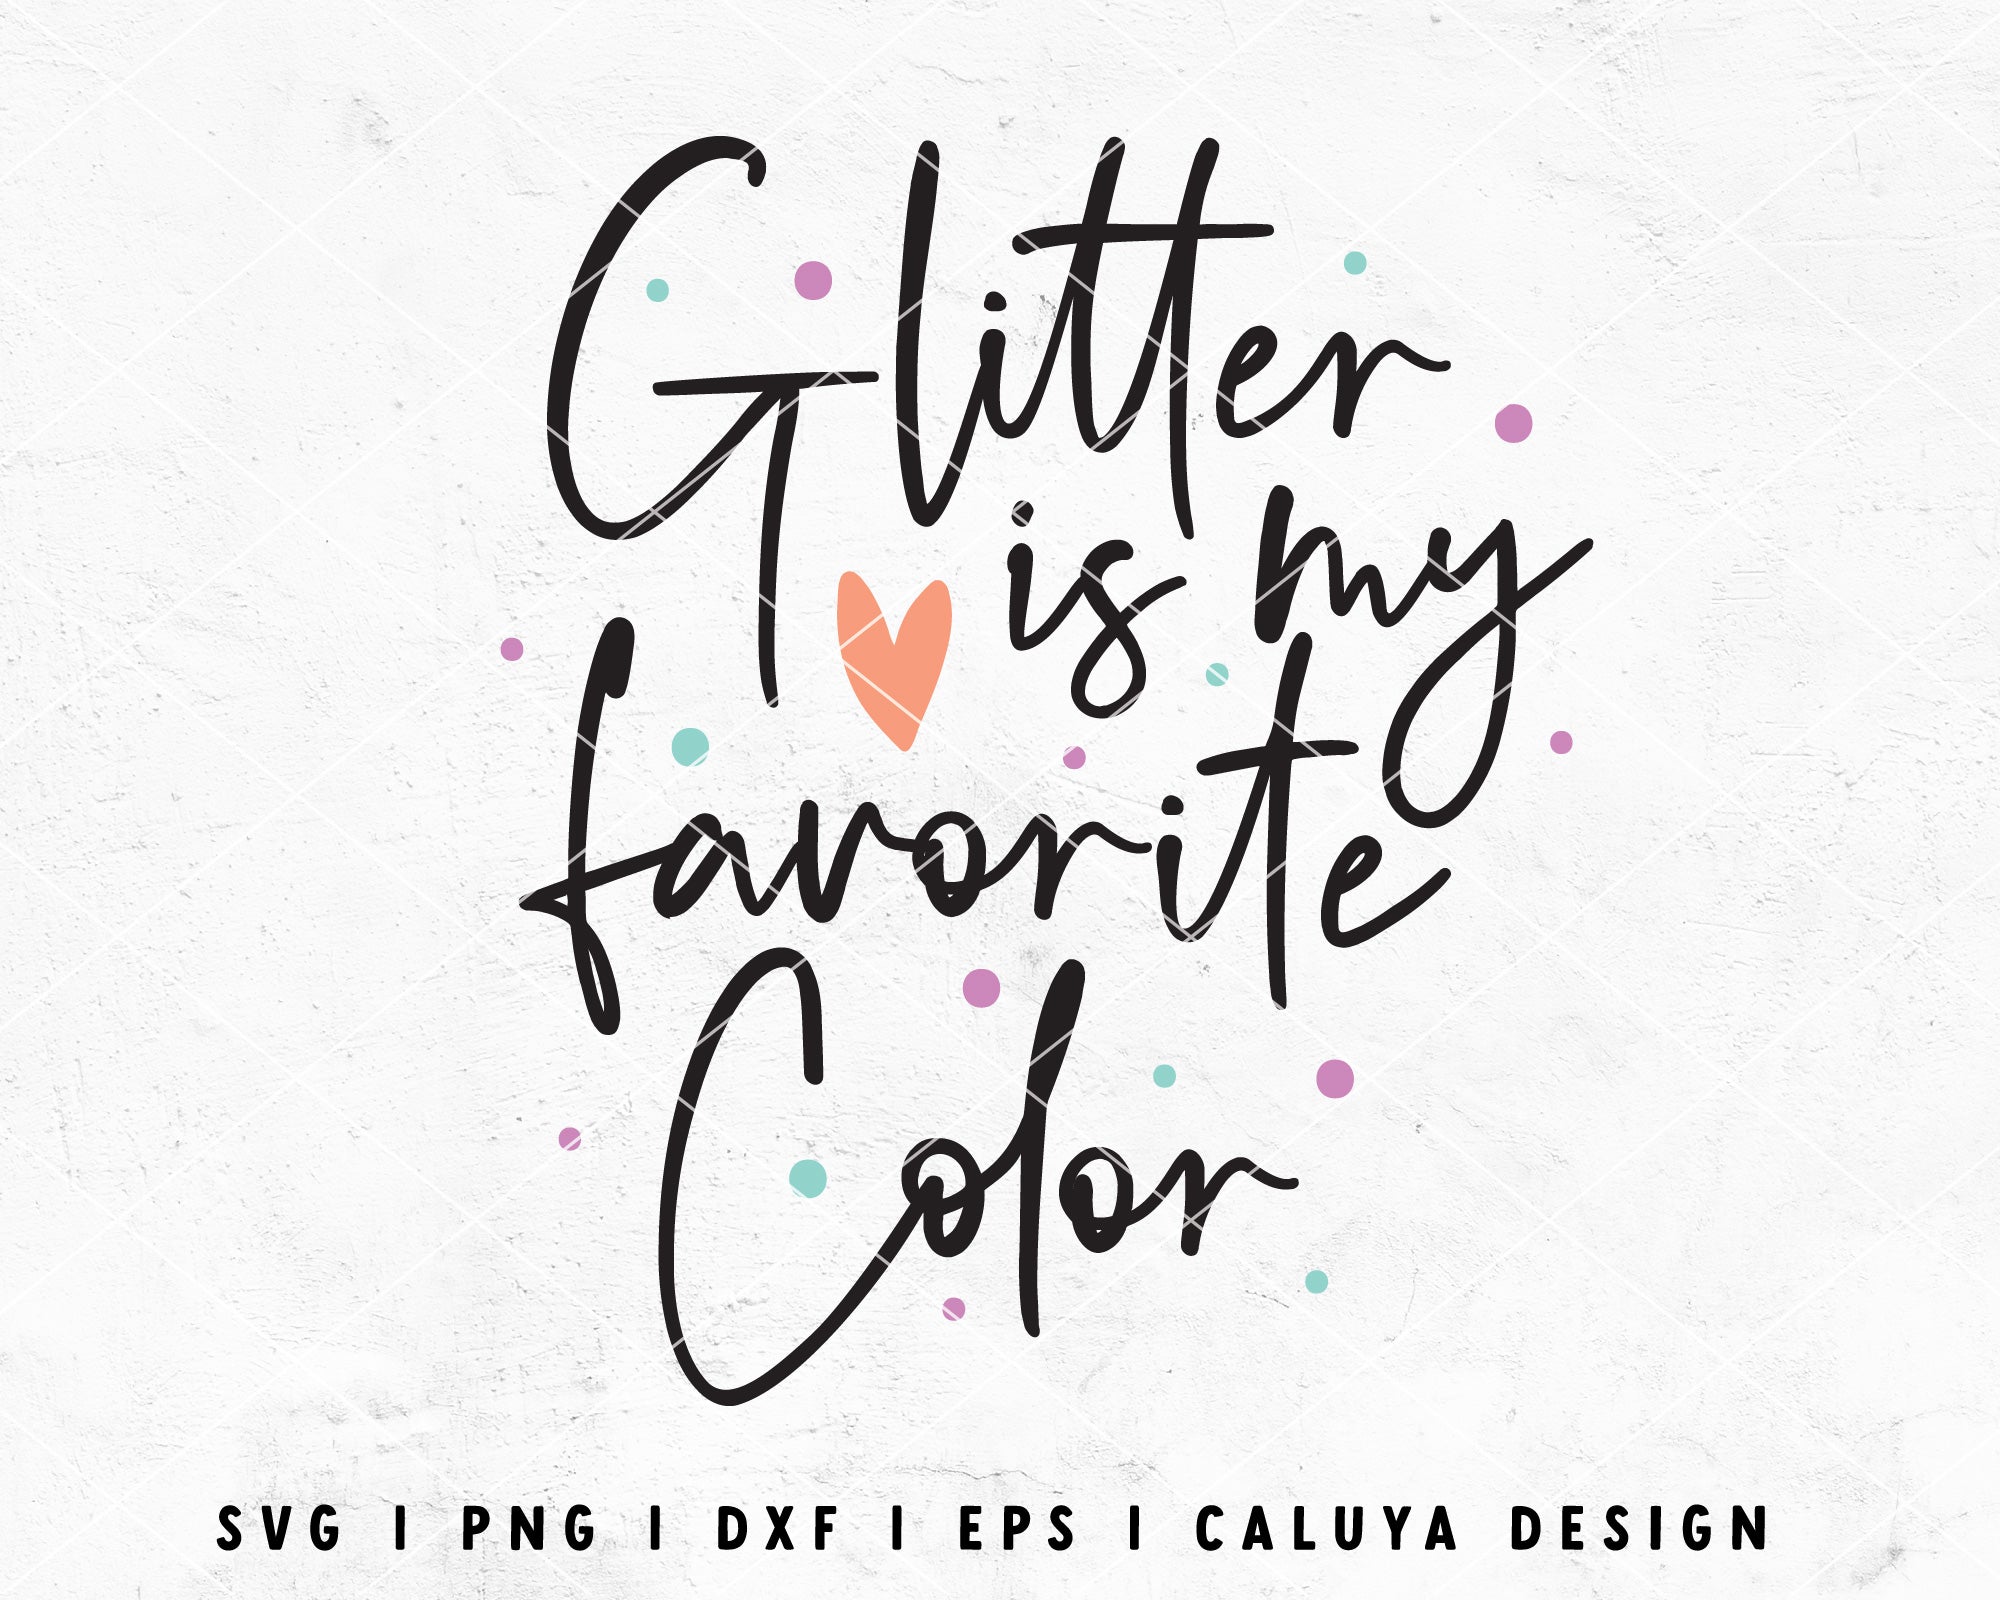 Brown Glitter SVG - Free SVG files